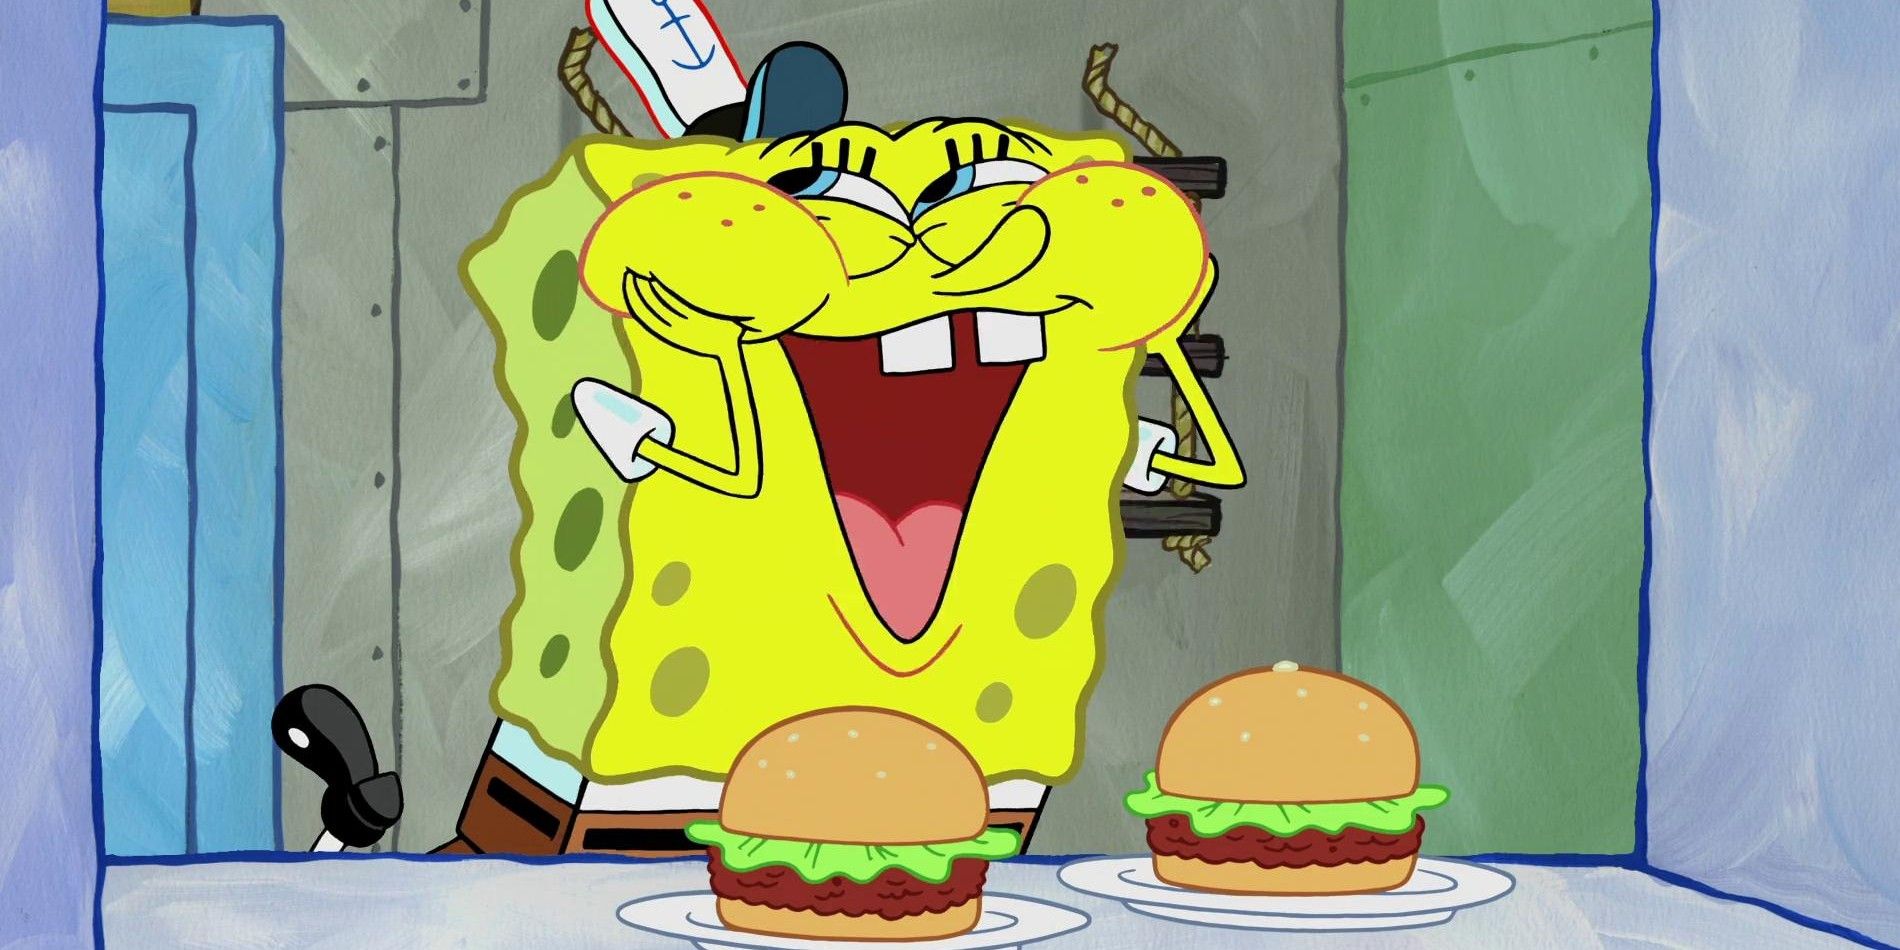 Spongebob Squarepants smiles at two Krabby Patties